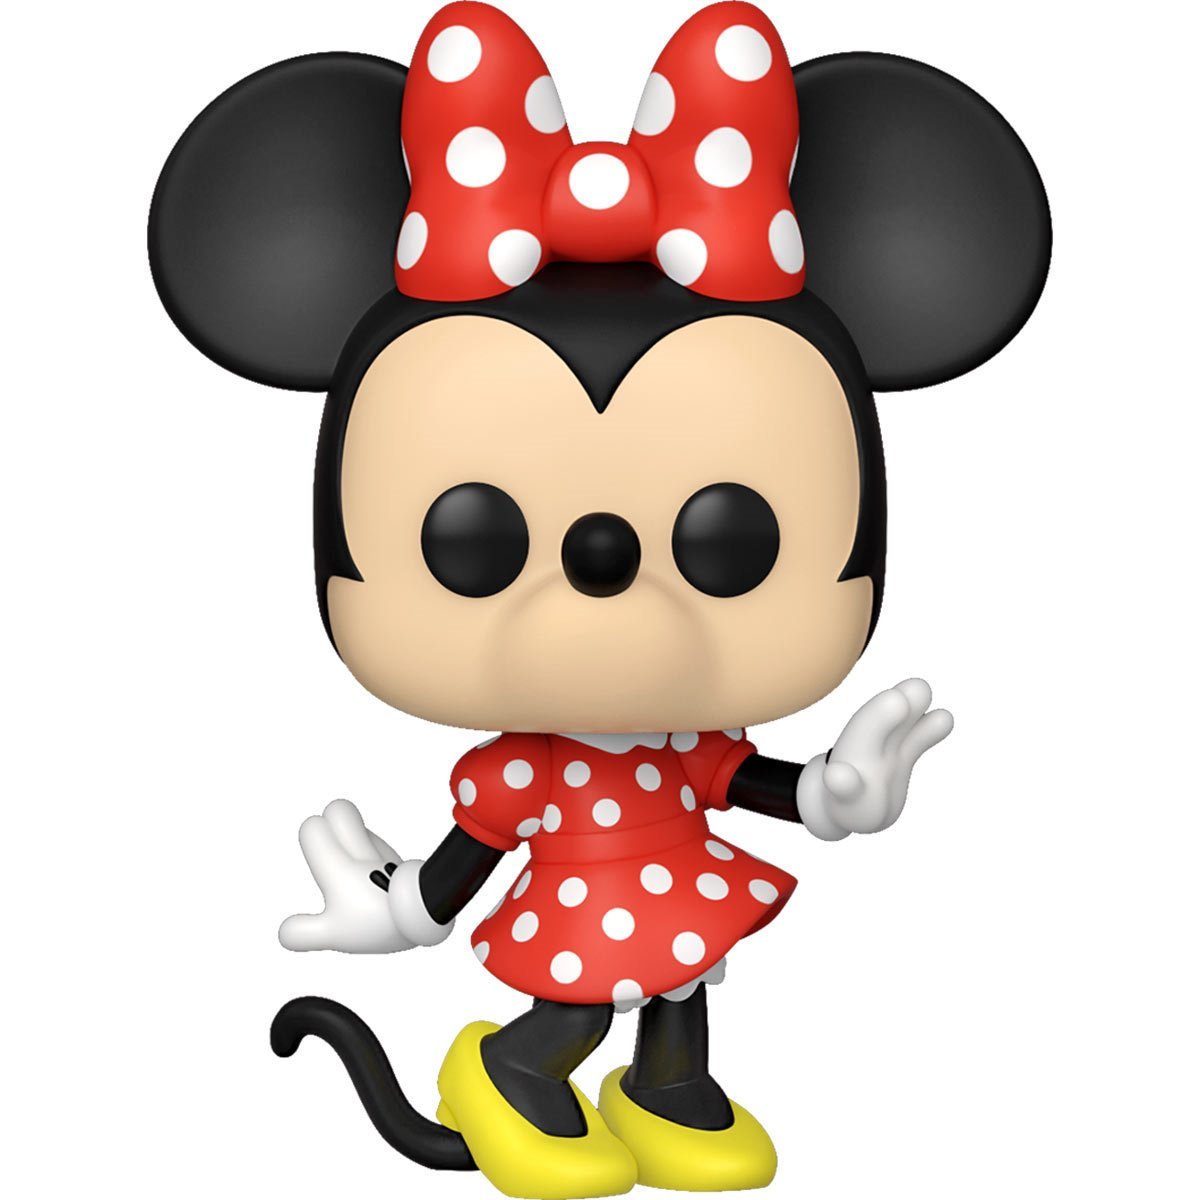 Hormiga lavabo Red Disney Classics Minnie Mouse Funko Pop! Vinyl Figure